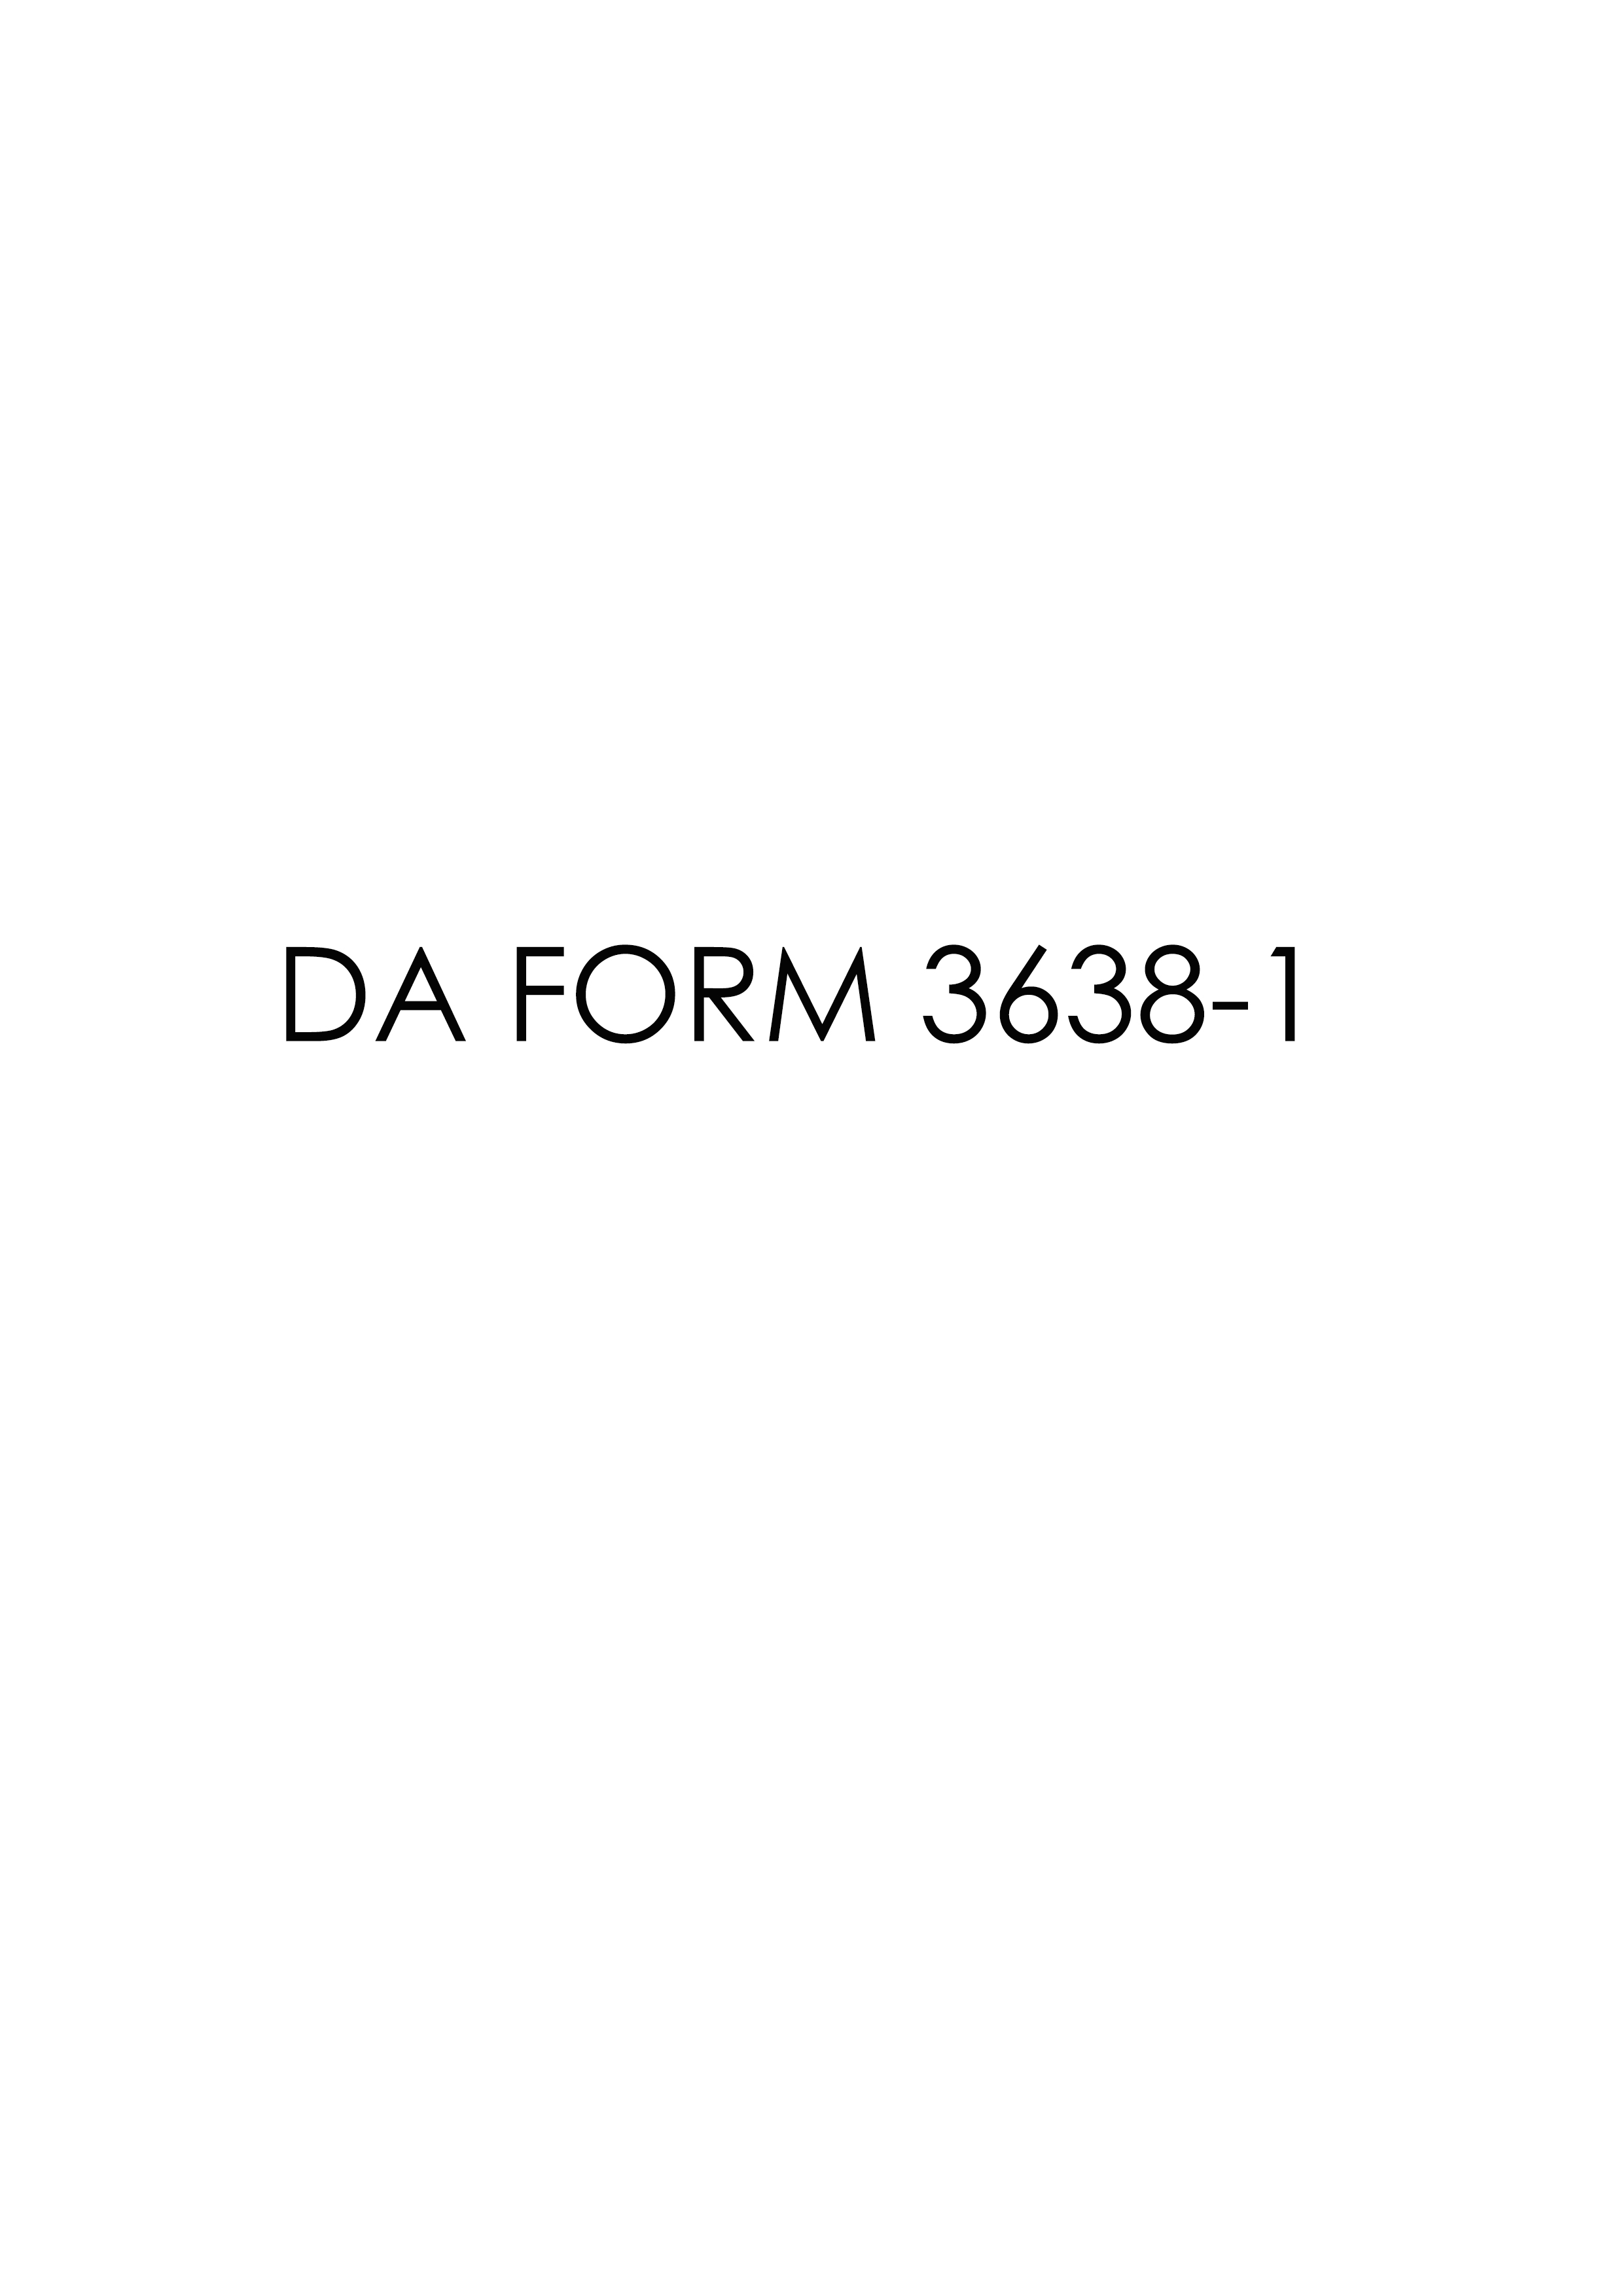 Download Fillable da Form 3638-1